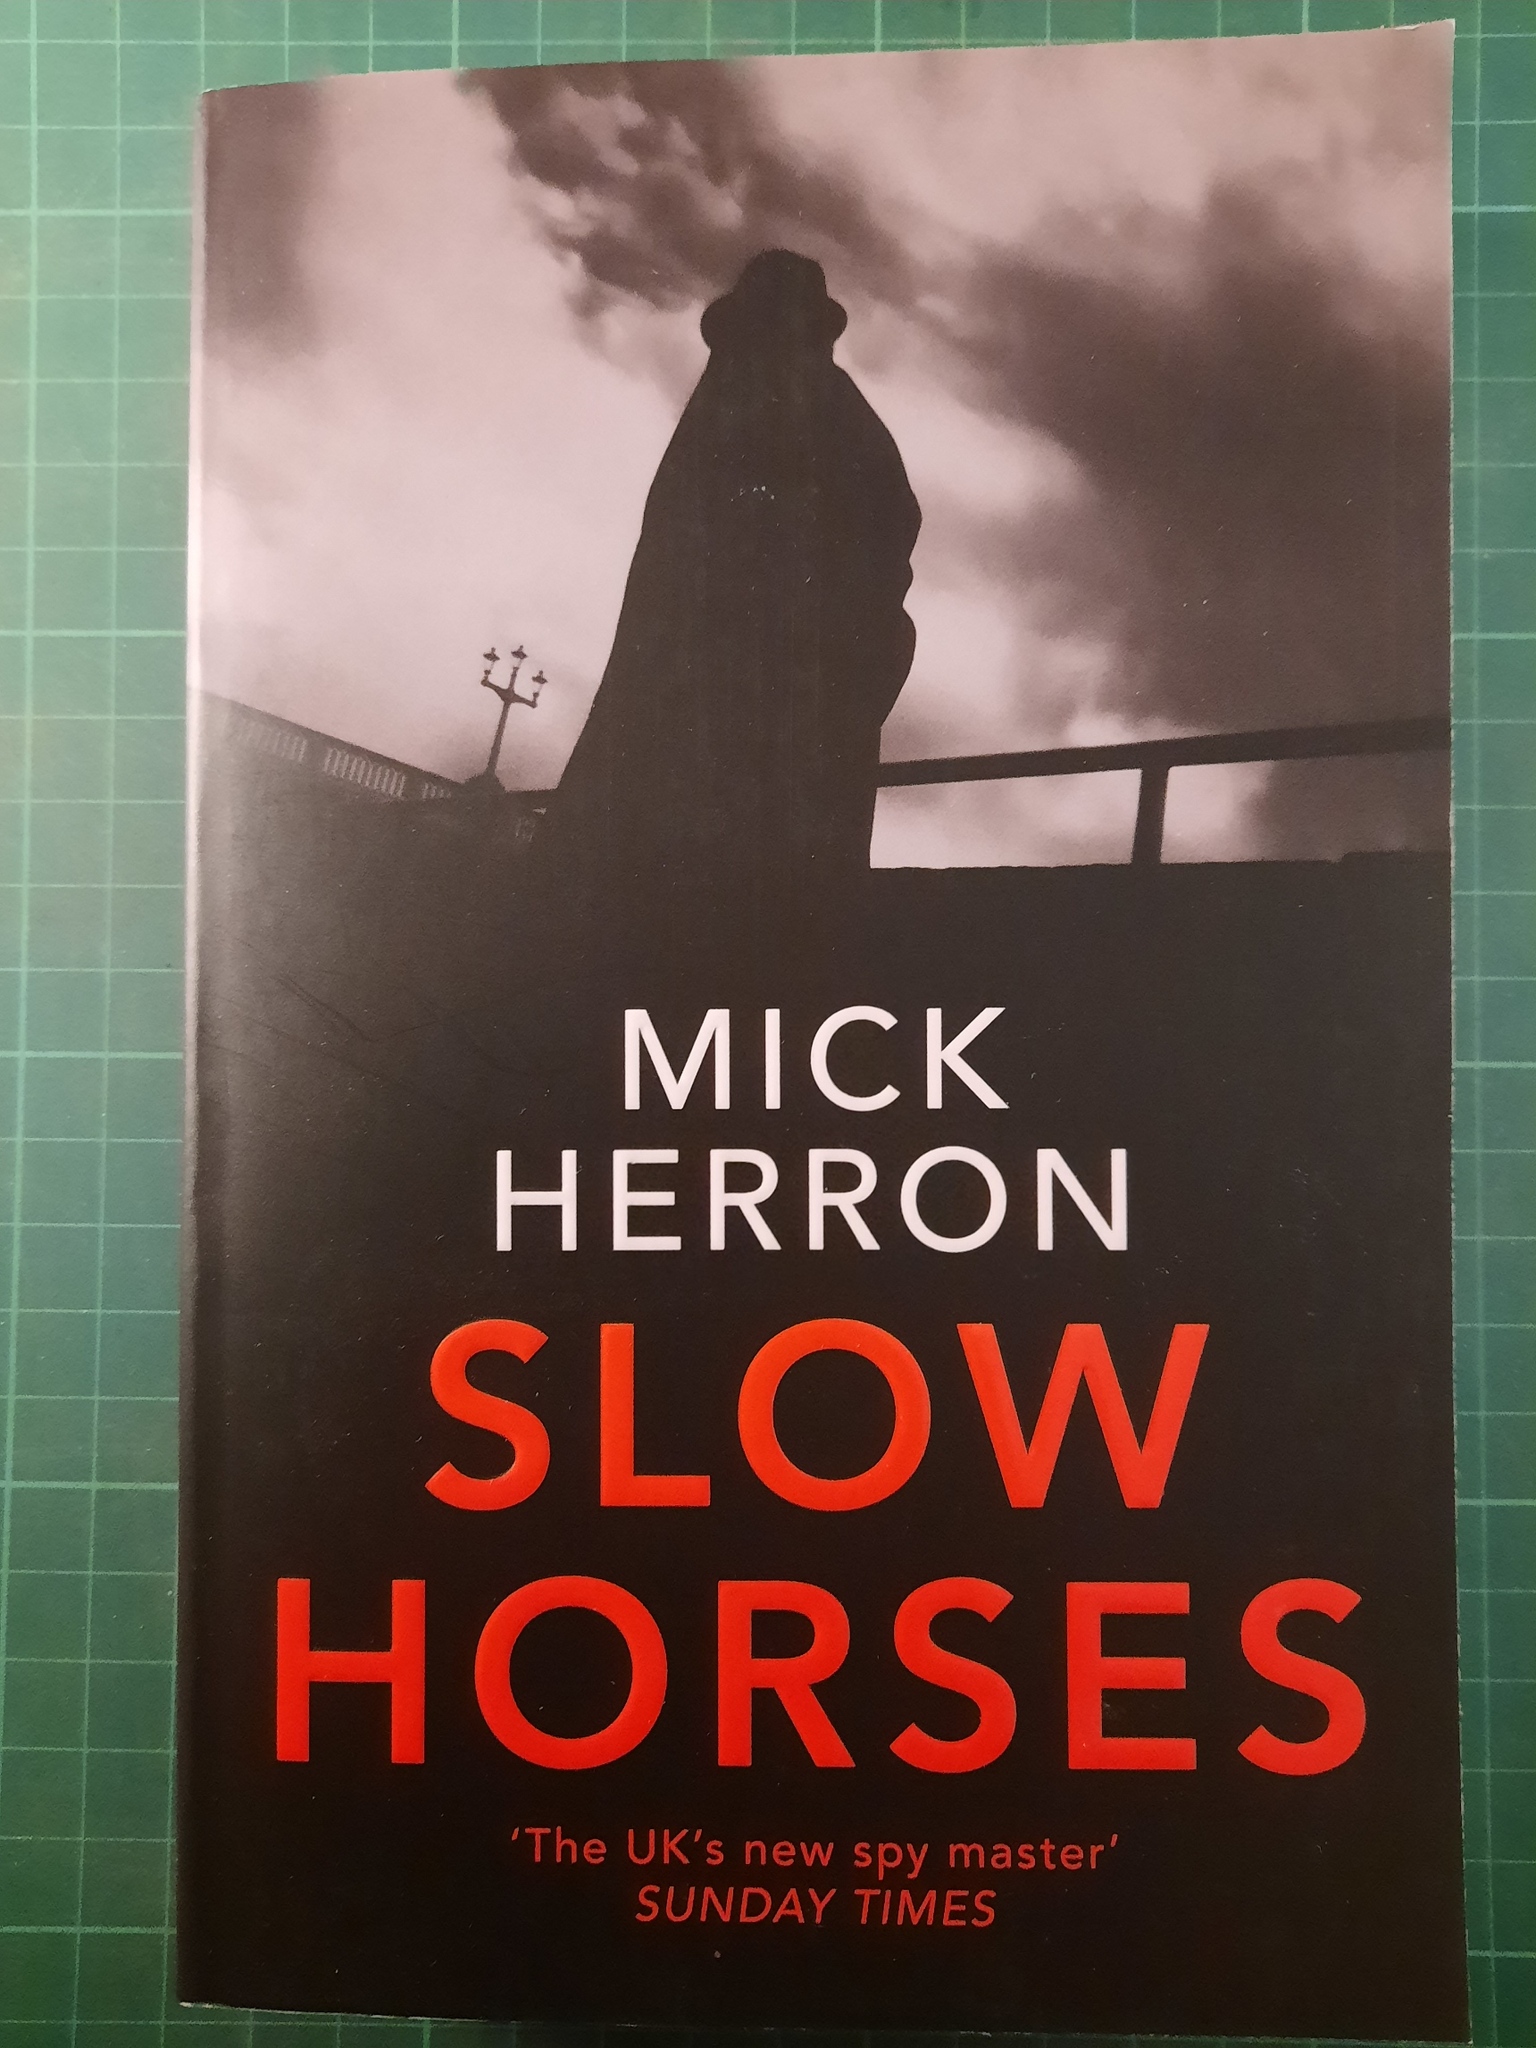 Slow horses